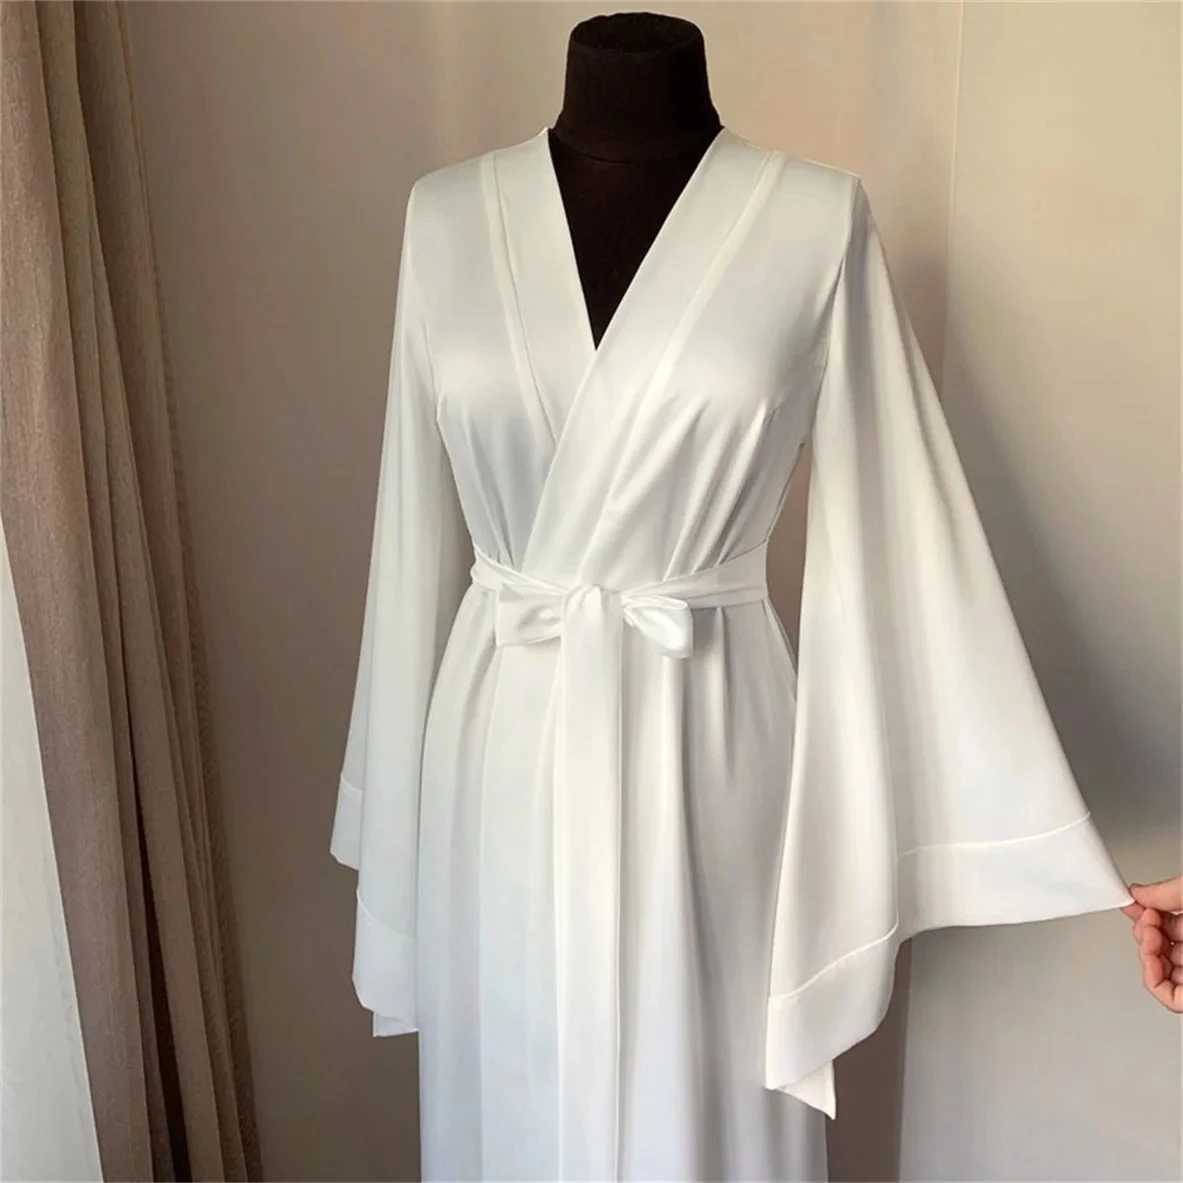 ZV51 Women's Sleep Lounge White Soft Silk Bridal Robe With Belt Long Sleeve Dressing Gown Wedding Bathrobes Women Boudoir Sleepwear Nightrowns D240419